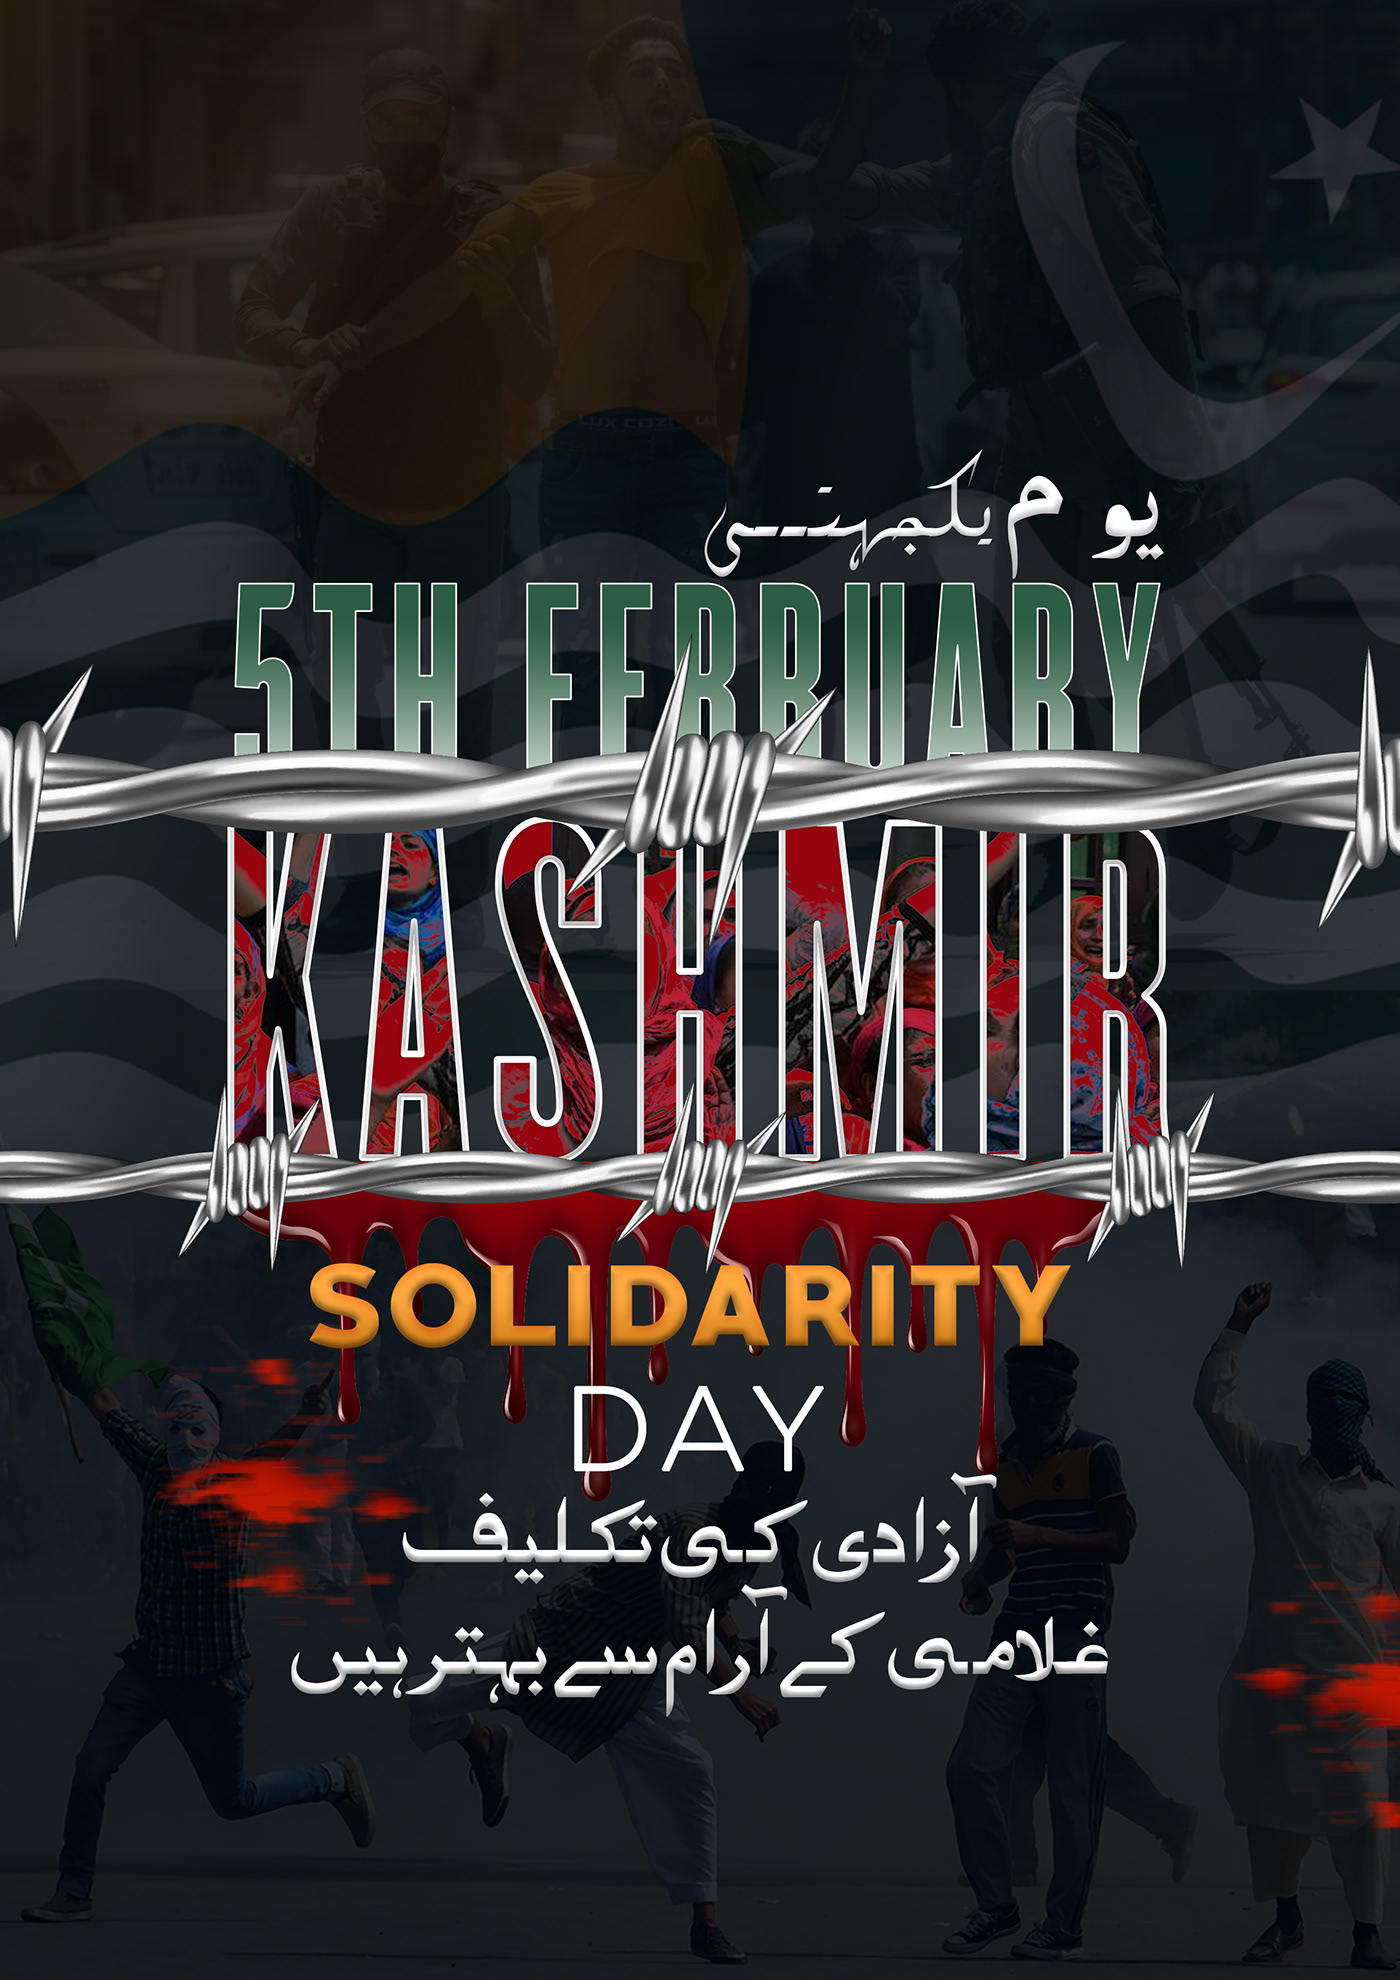 5 february 5th feb 5th Feb Solidarity Day FEEL PAIN OF KASHMIR Freedom of Kashmir Kashmir day Solidarity day Solidarity Day 2021 Stand with kashmir Stop Killing Kashmiri